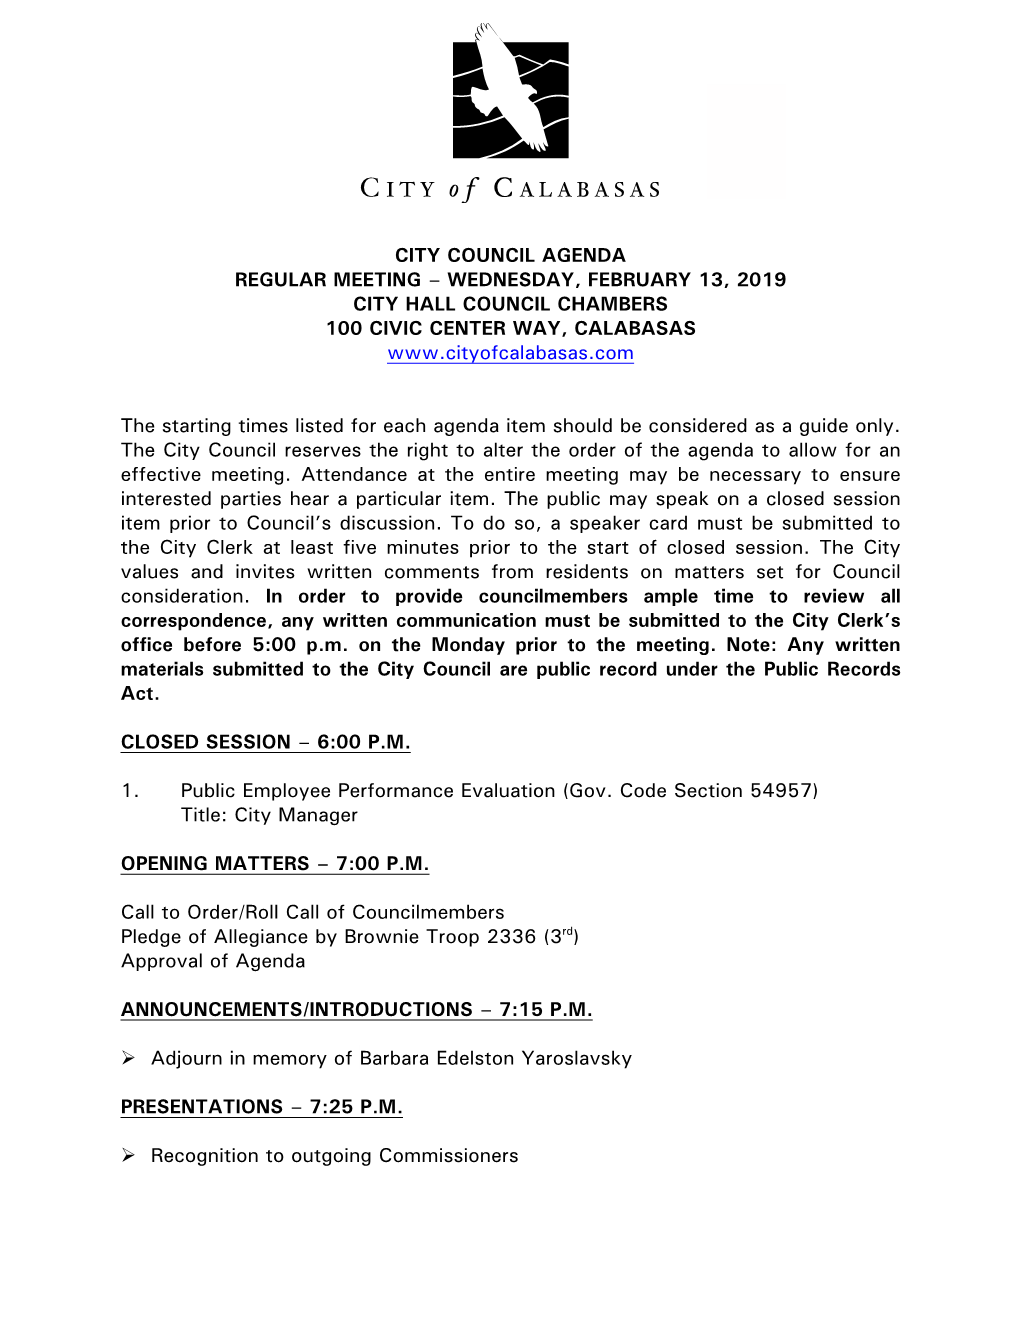 City Council Agenda Regular Meeting – Wednesday, February 13, 2019 City Hall Council Chambers 100 Civic Center Way, Calabasas